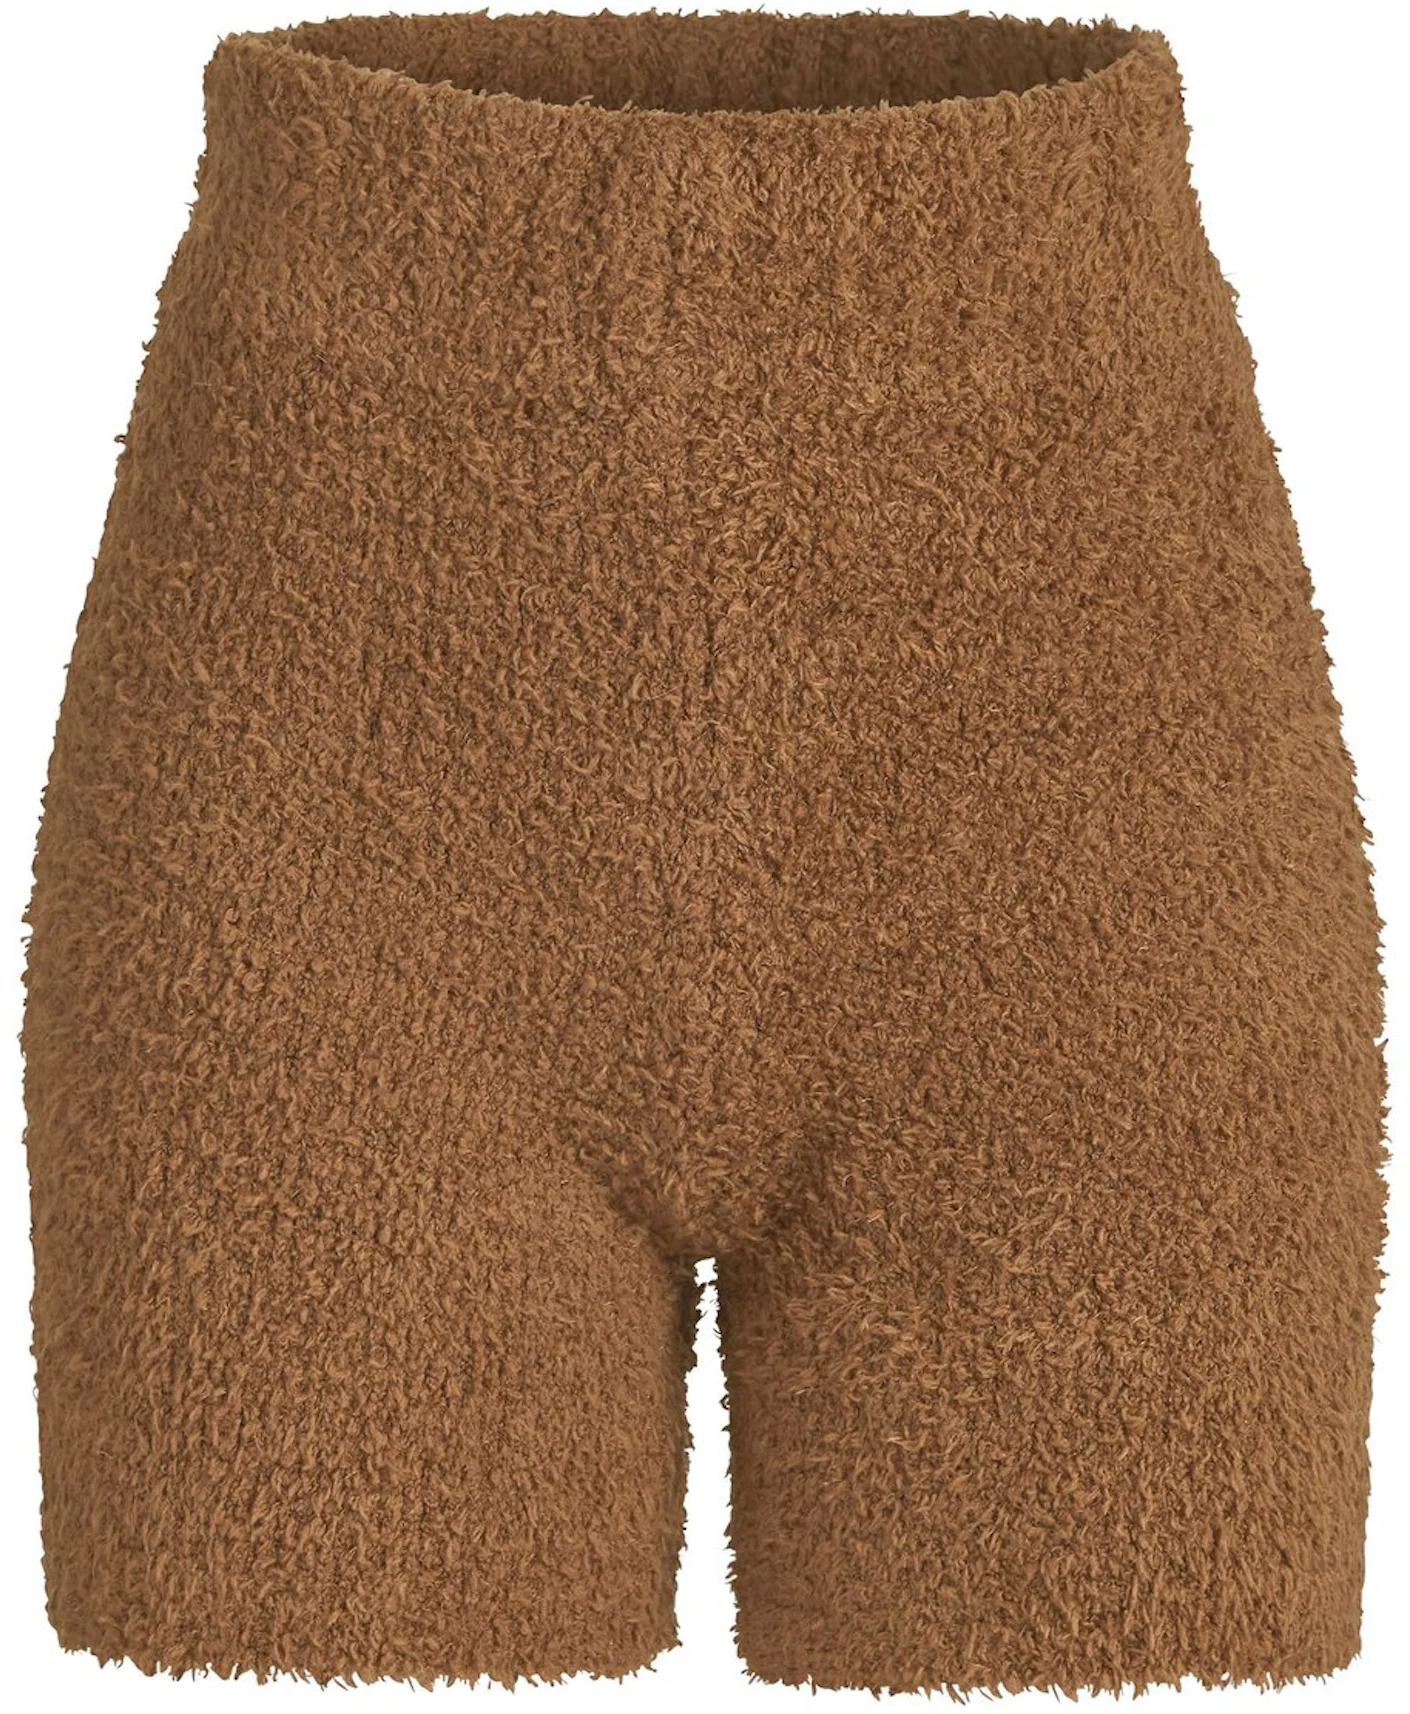 Skims brown cozy knit - Gem